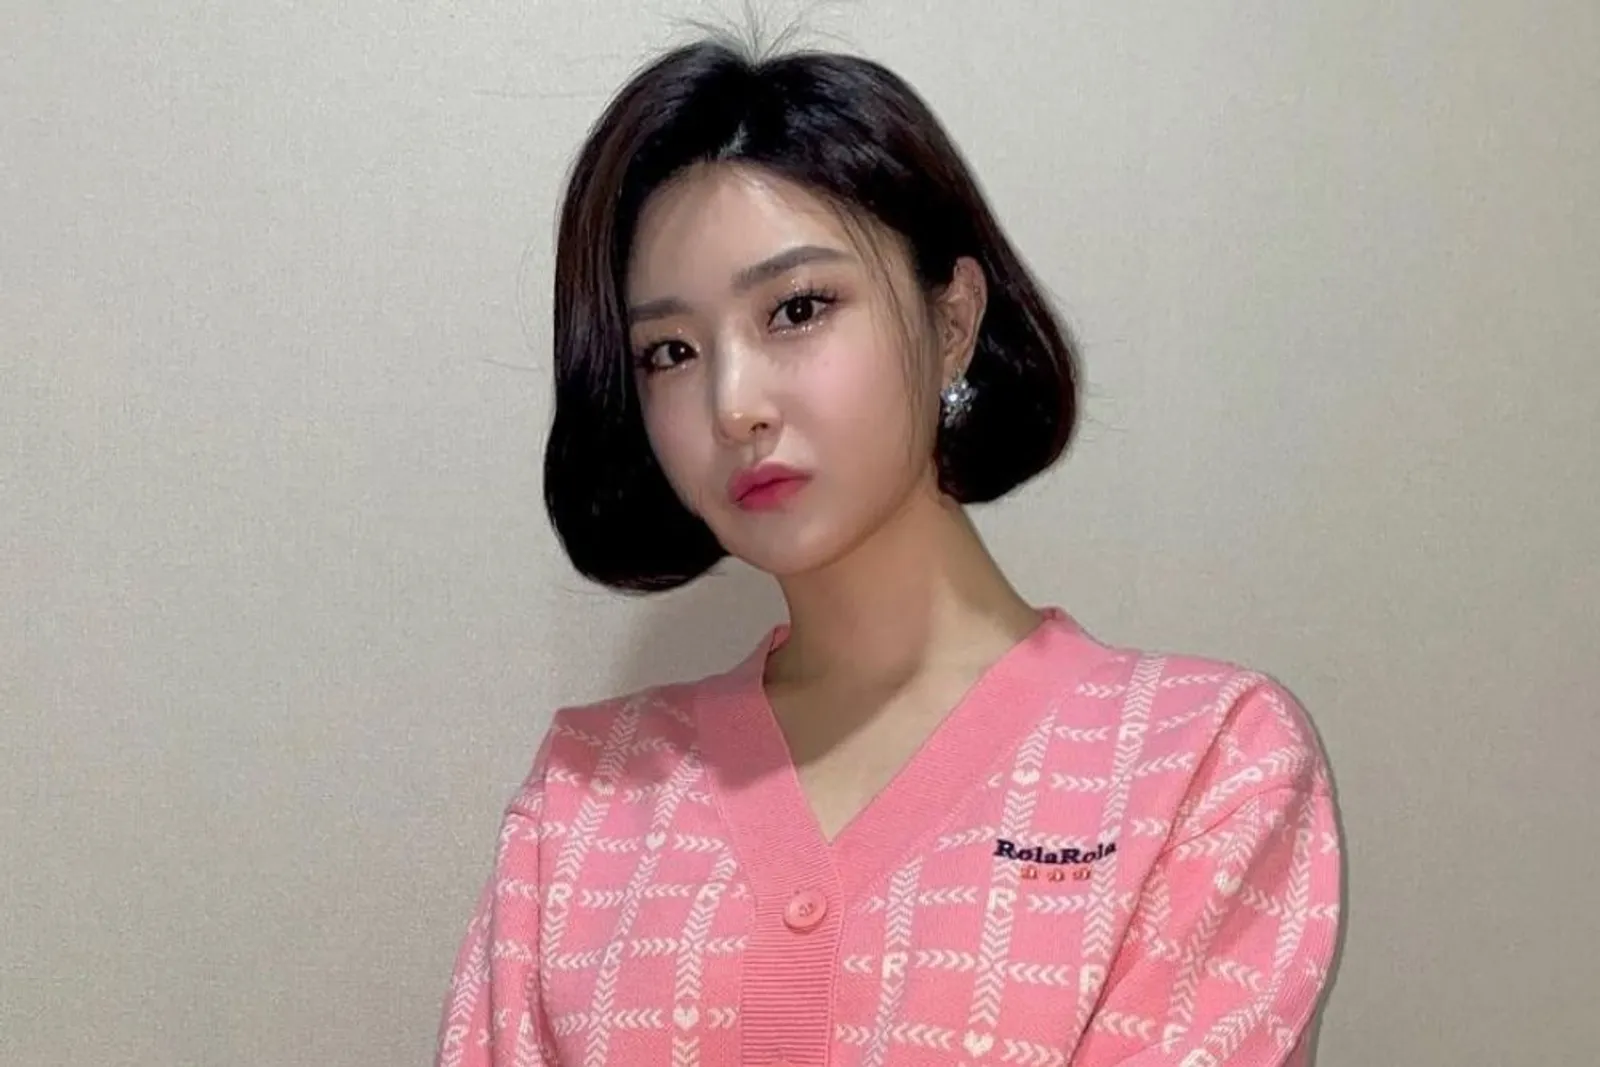 Intip Potret Member Brave Girls, Idol Kpop yang Lagi Viral!